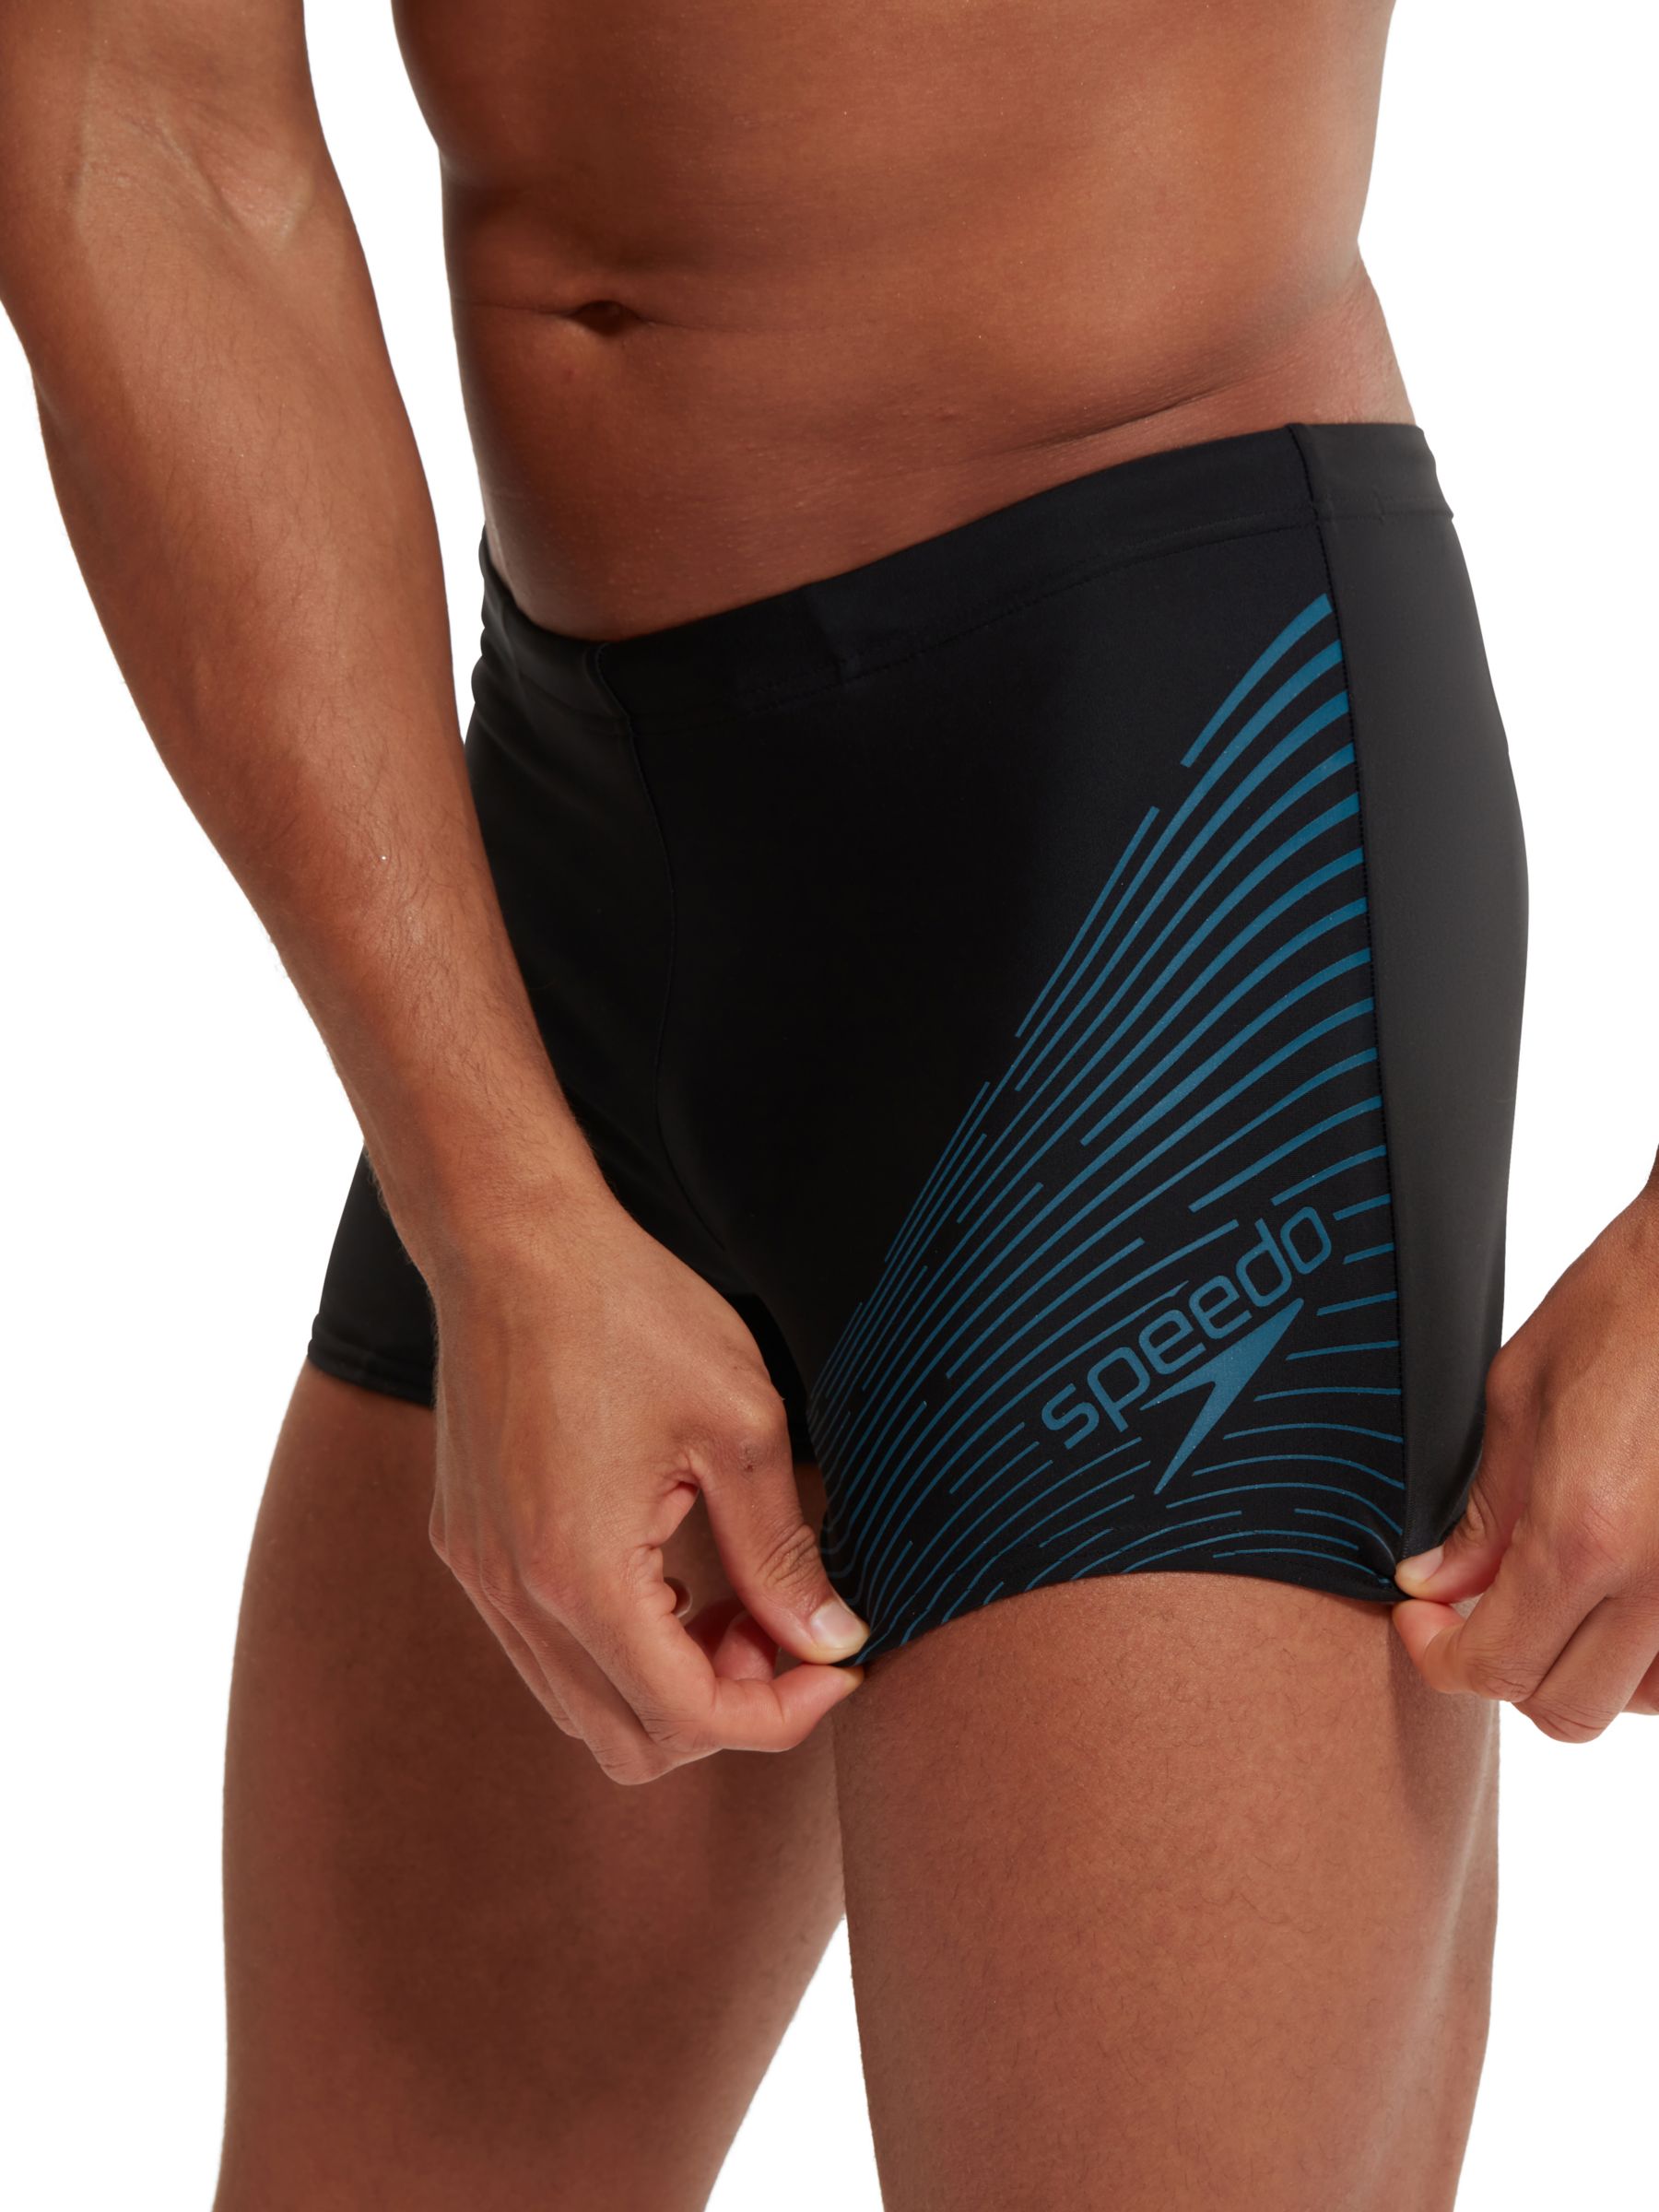 Buy Speedo Medley 7cm Swim Shorts, Black/Dark Teal Online at johnlewis.com